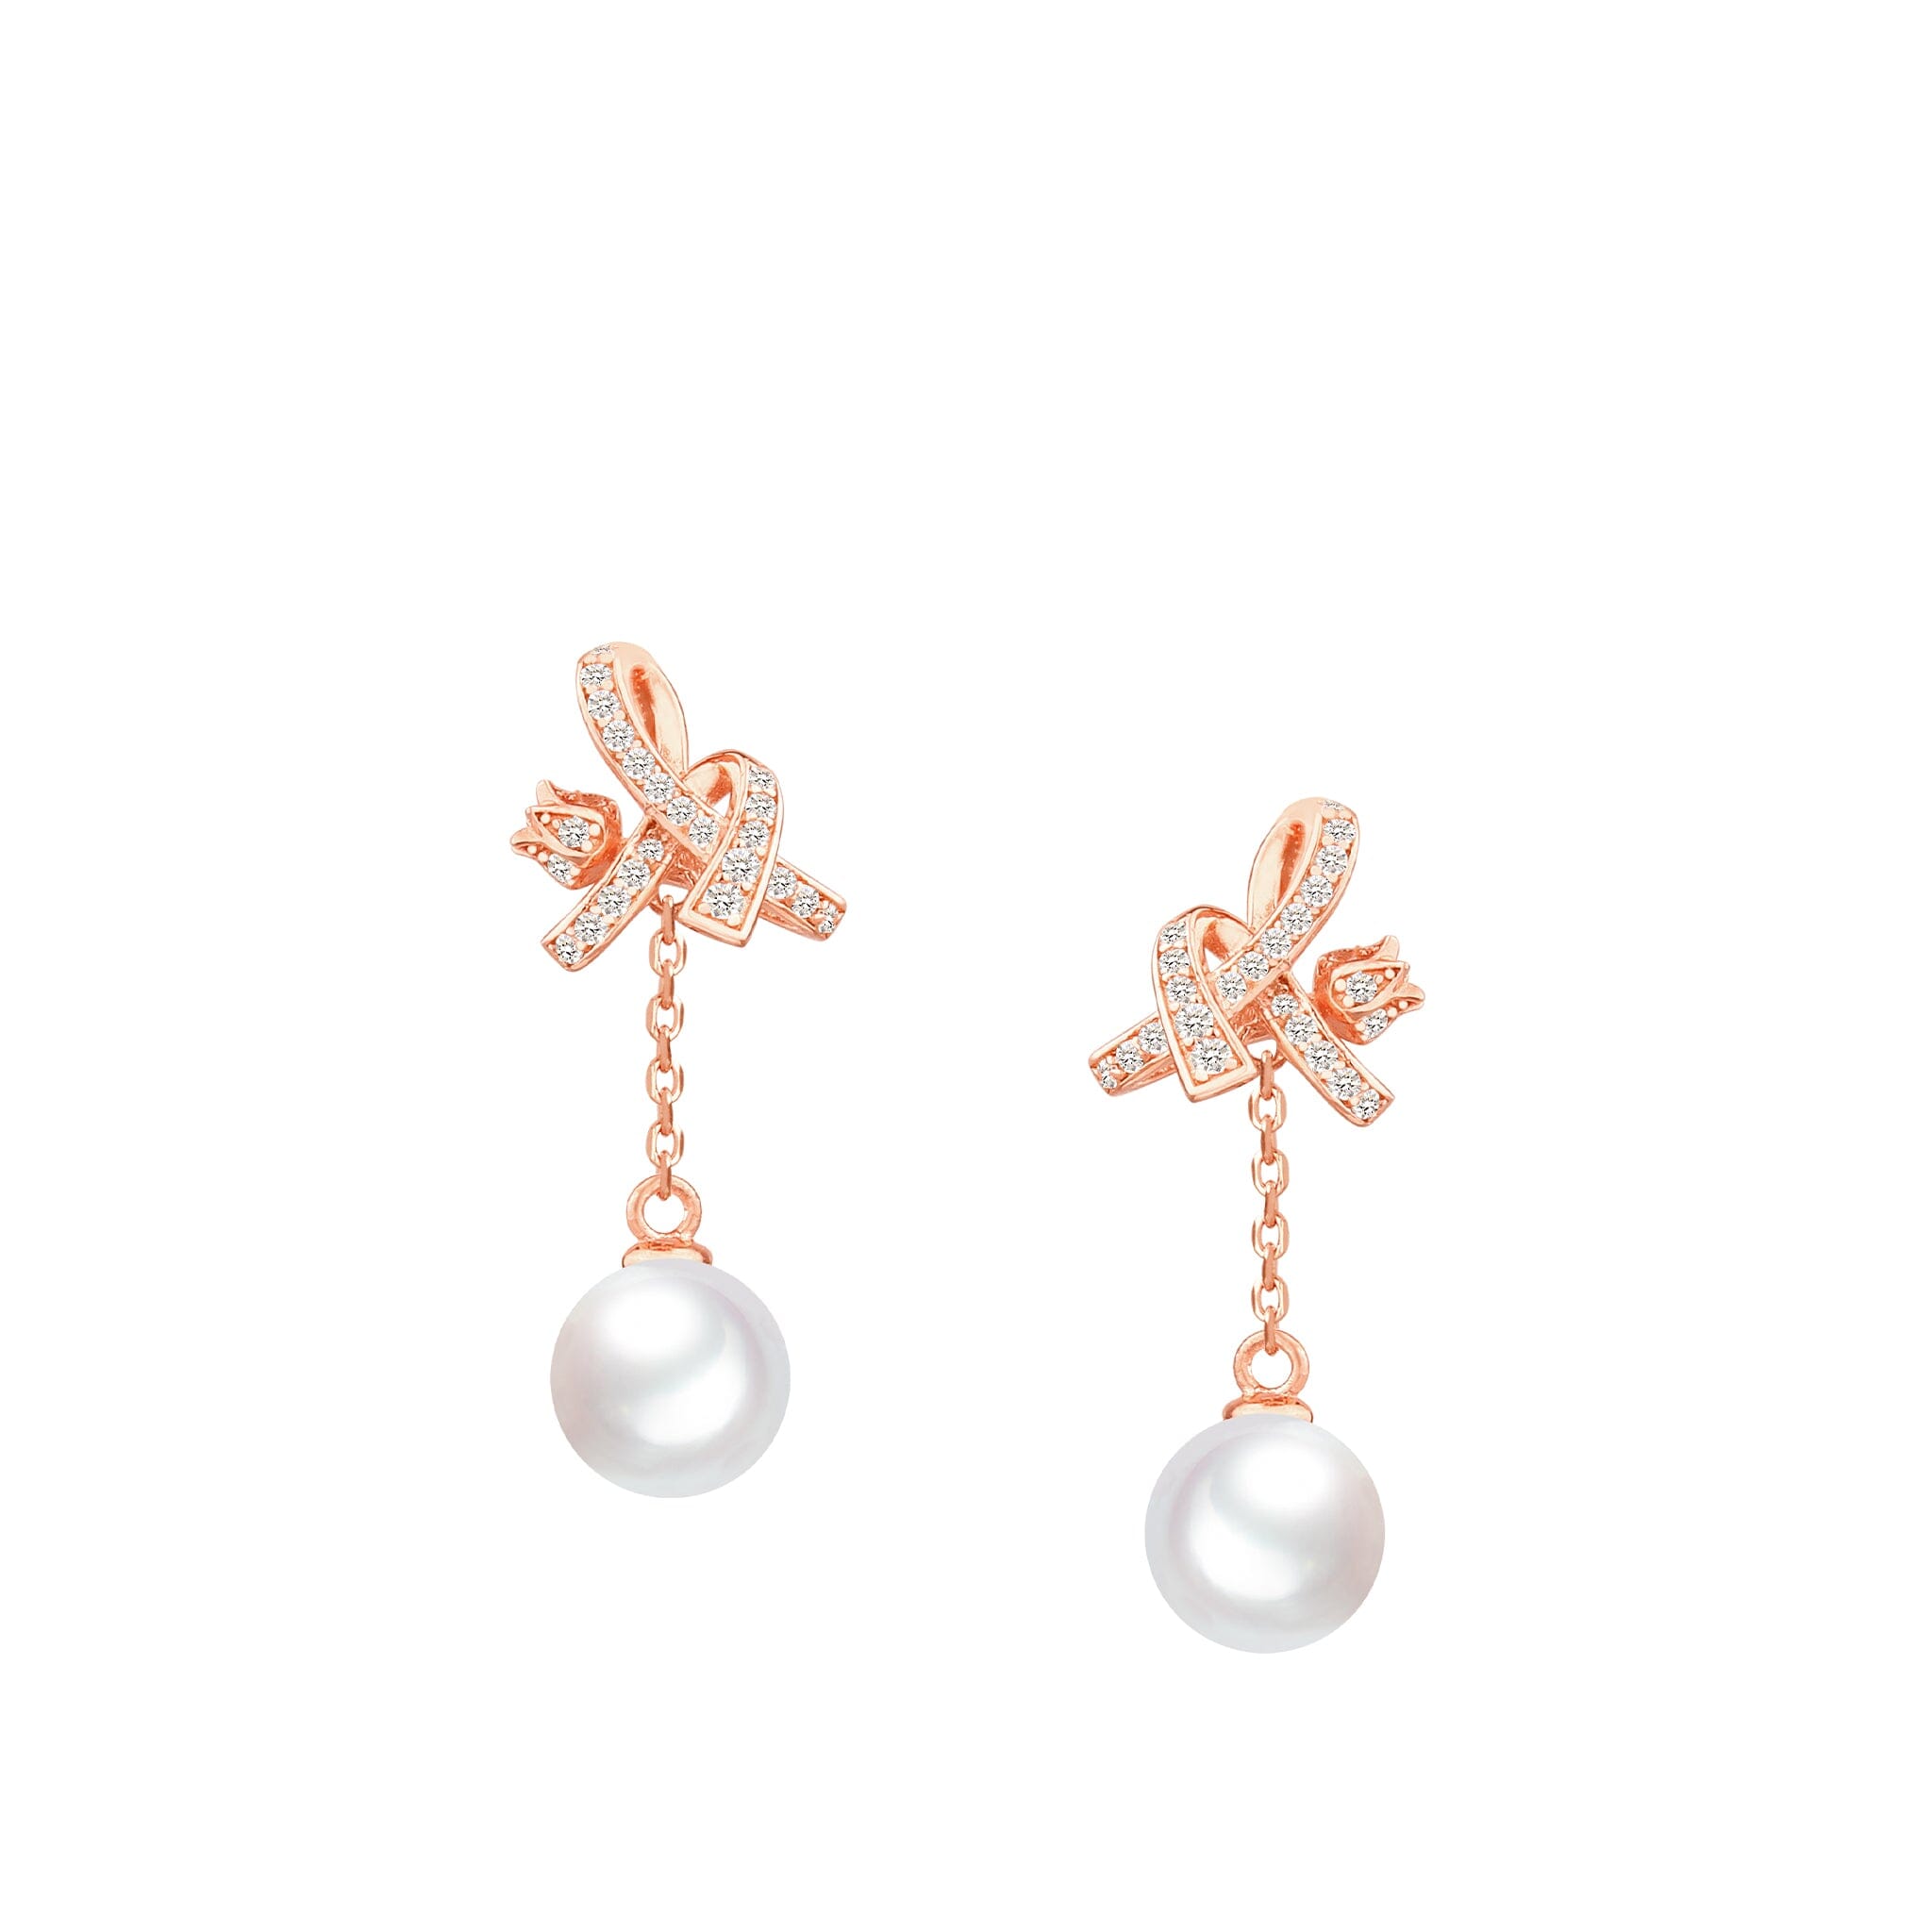 Women's Silver Drop Earrings with White Pearl Earrings AWNL Rose Gold 